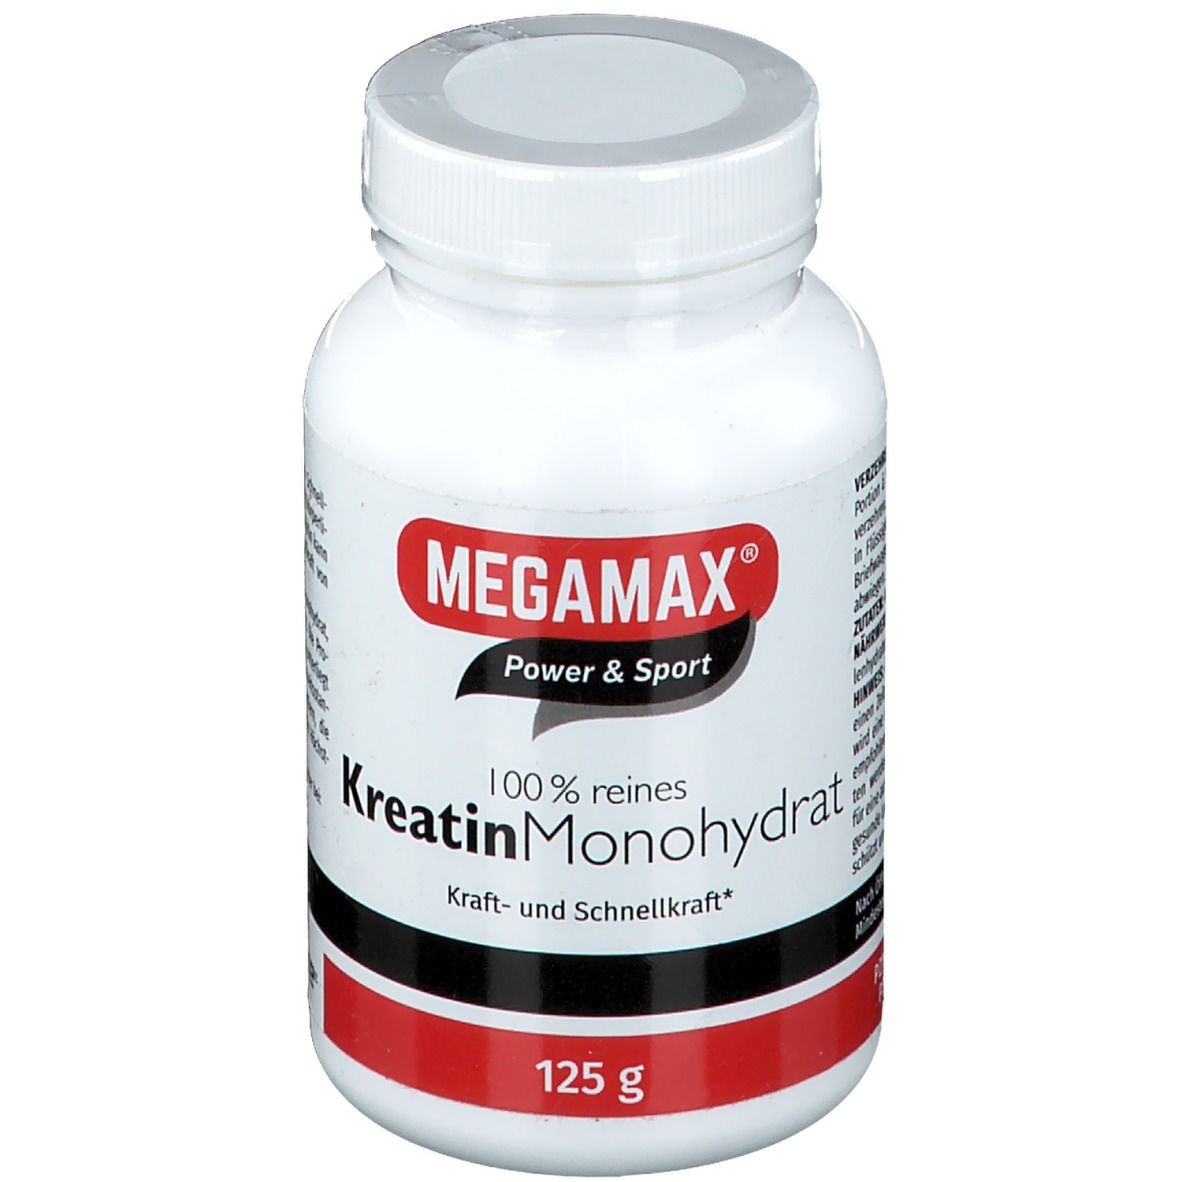 MEGAMAX® Power & Sport 100% reines KreatinMonohydrat